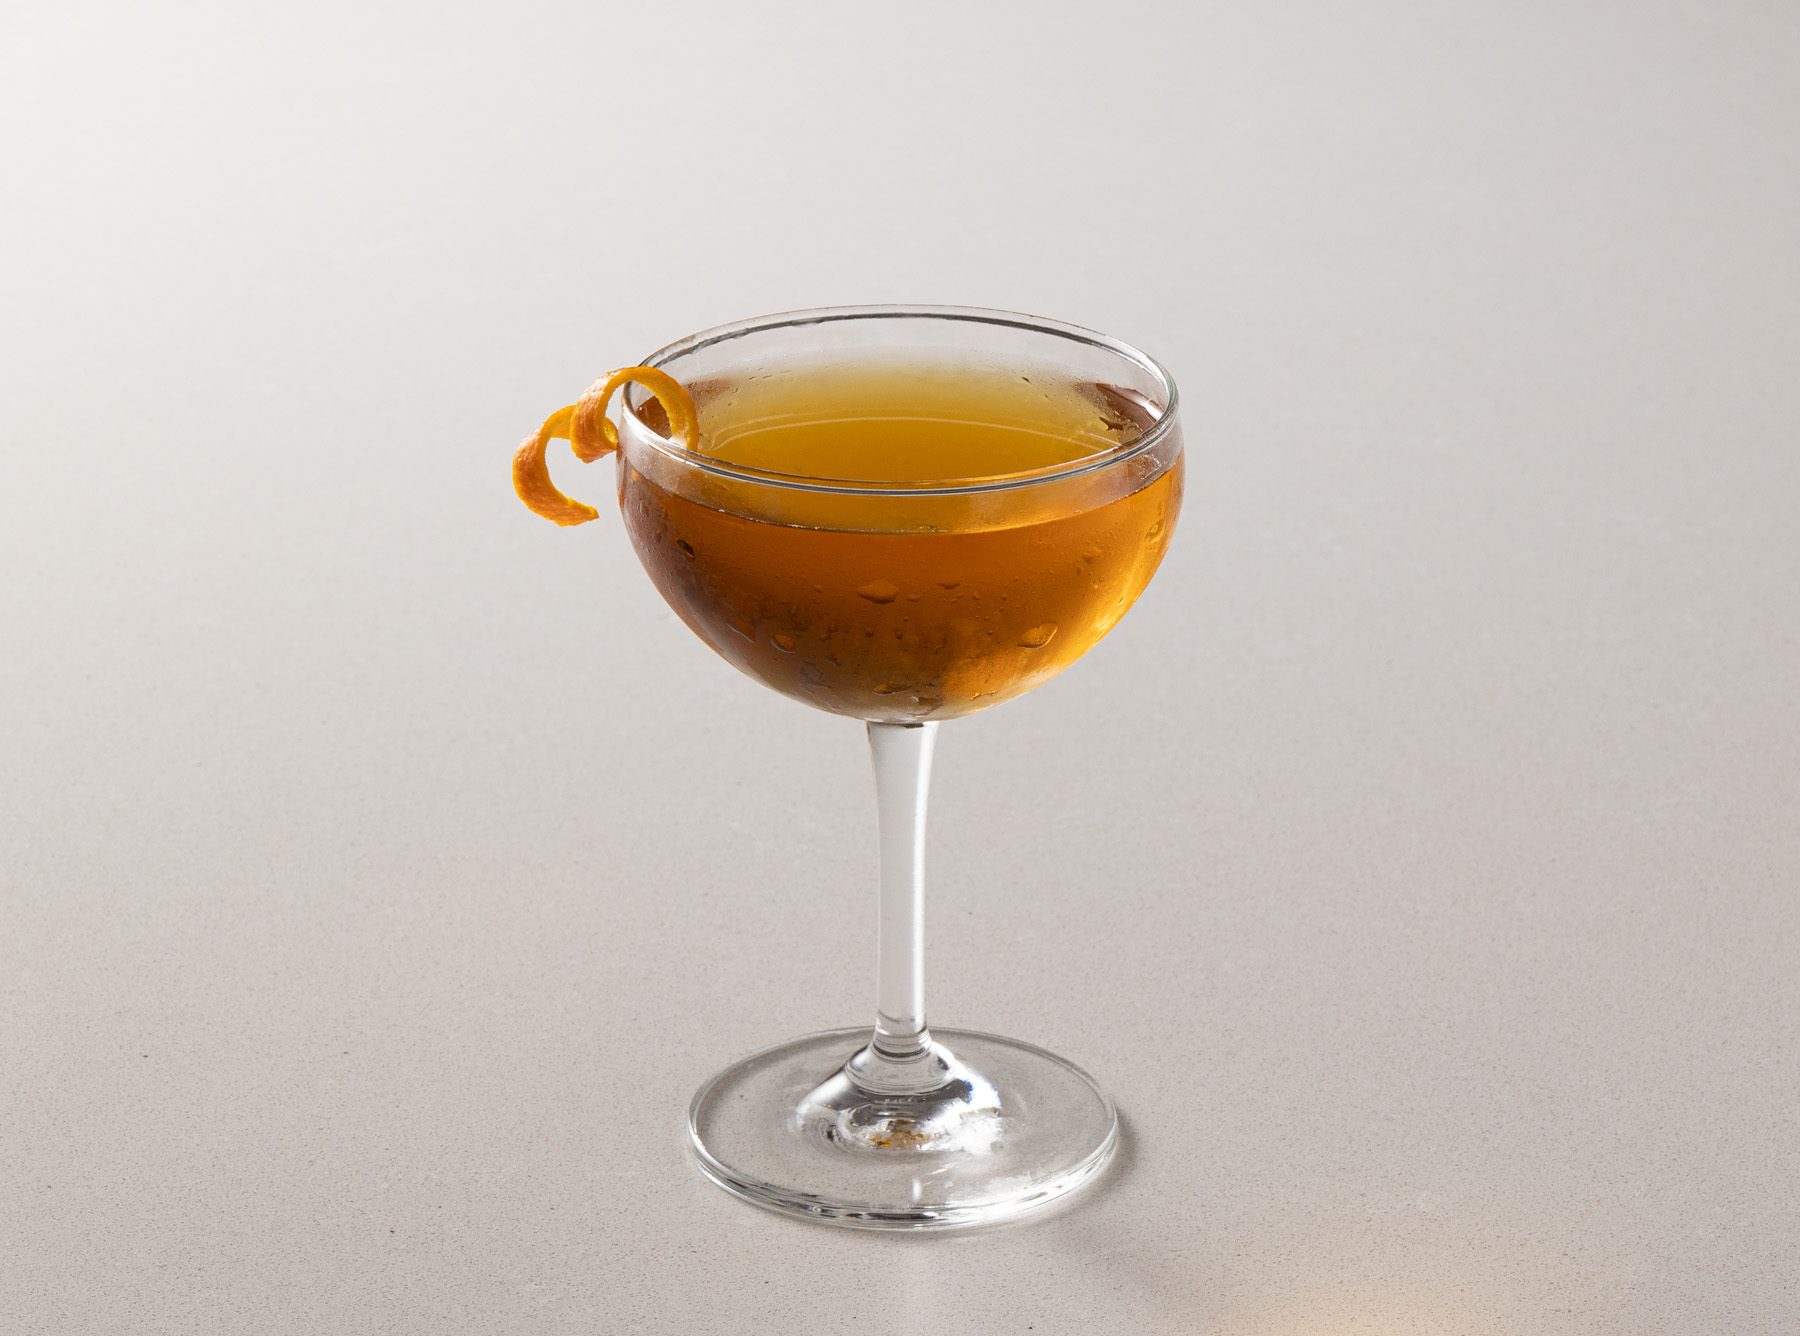 Cuban Manhattan cocktail